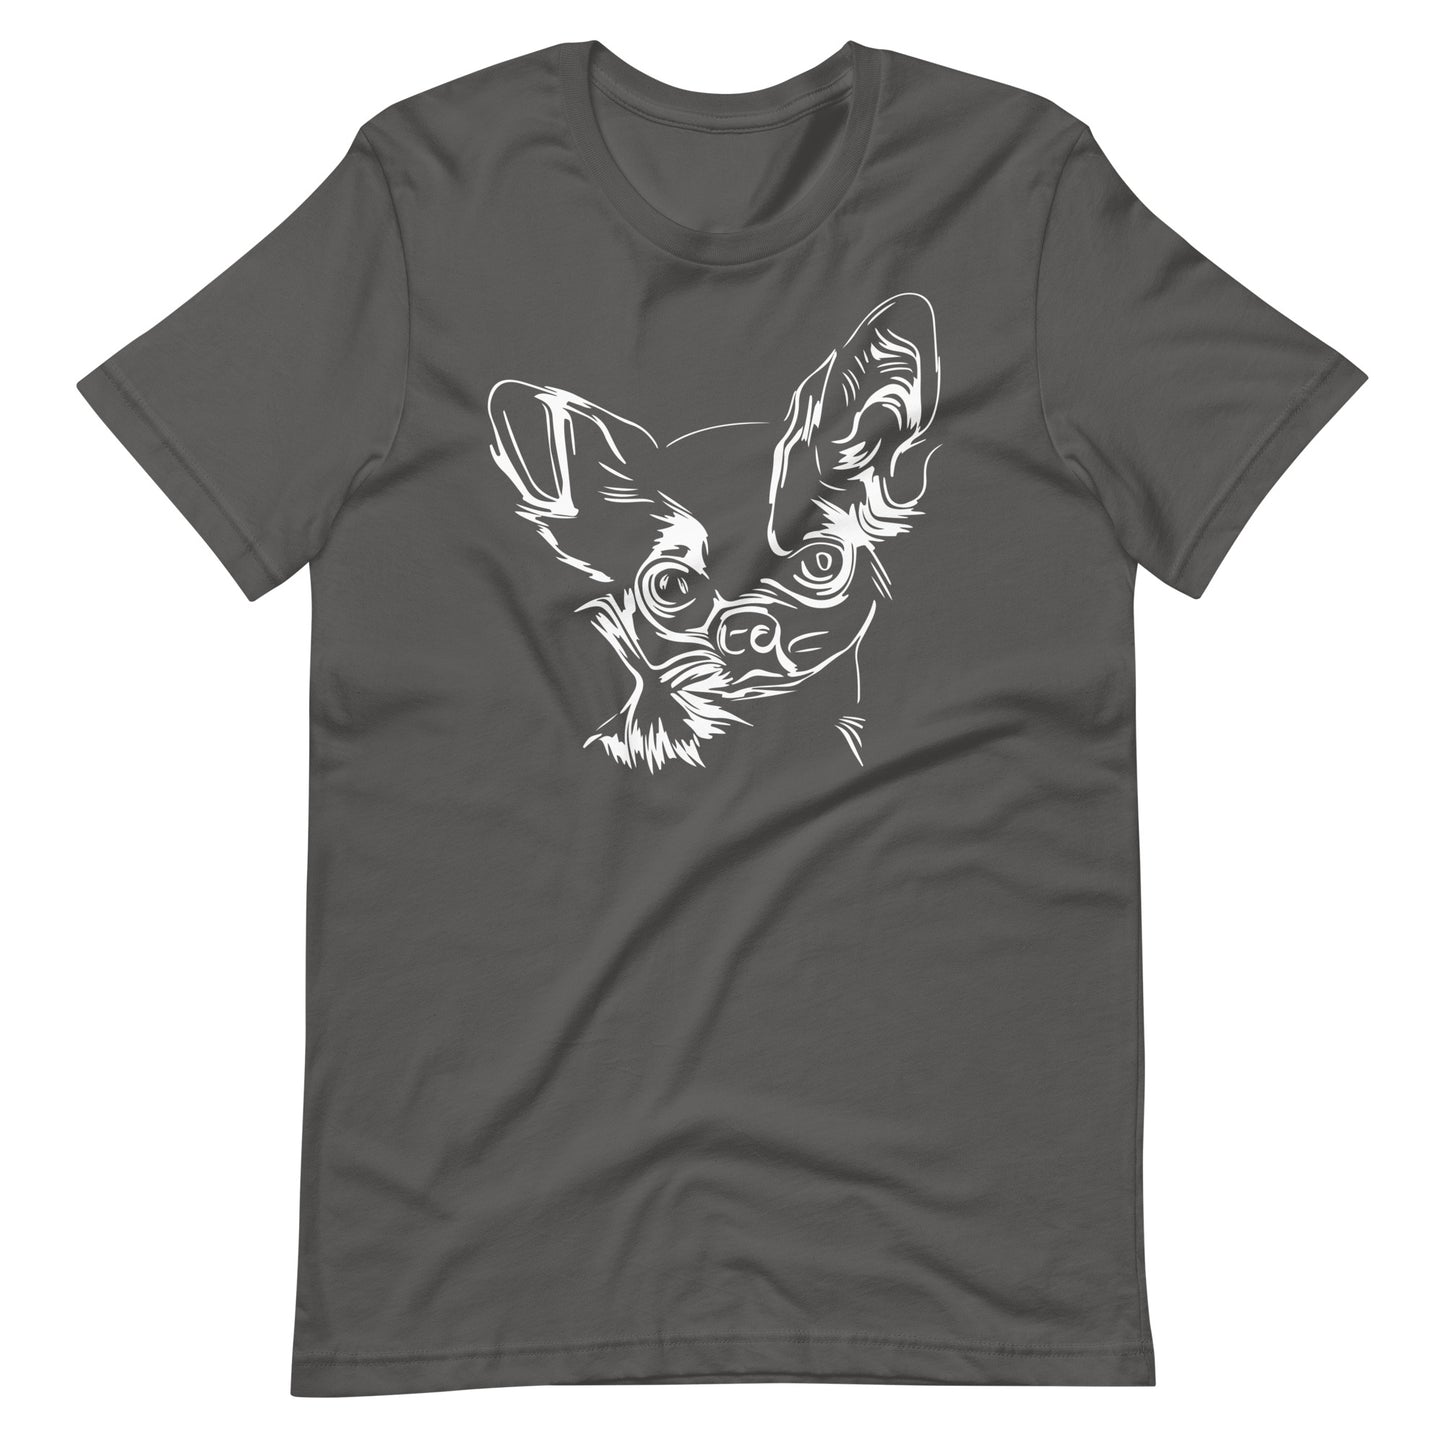 White line Chihuahua face on unisex asphalt t-shirt